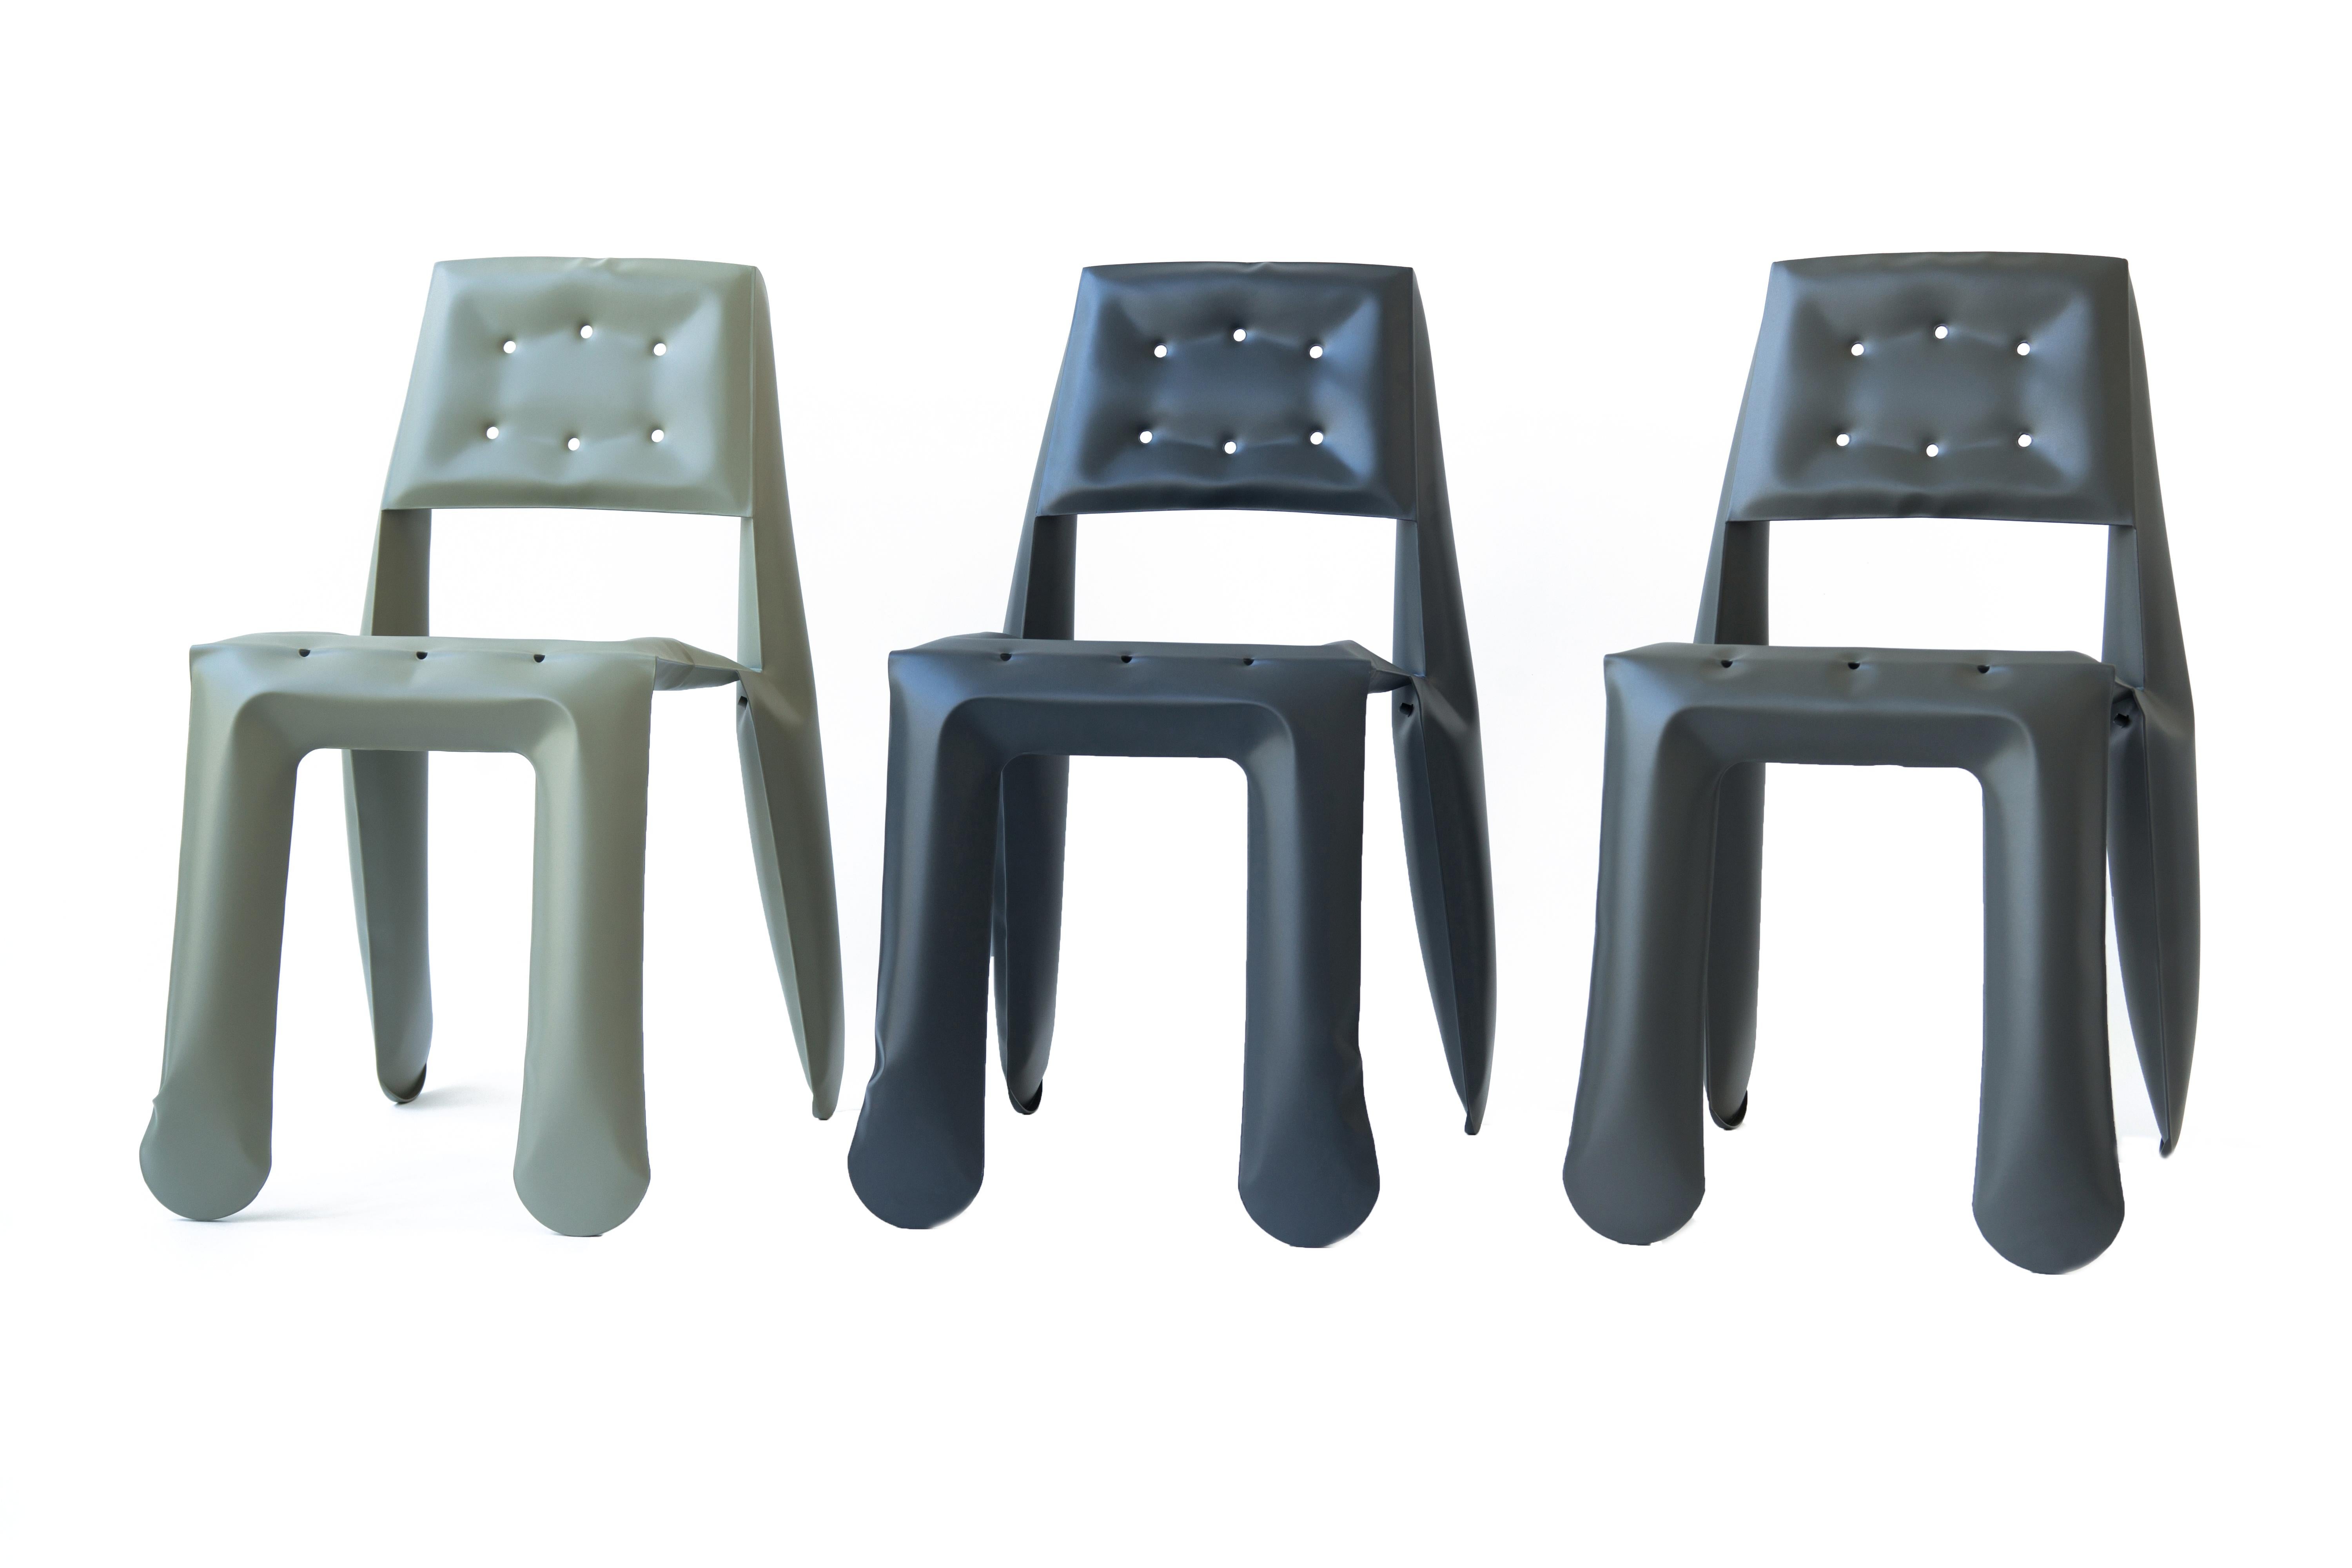 Polish Black Carbon Steel Chippensteel 0.5 Sculptural Chair by Zieta For Sale